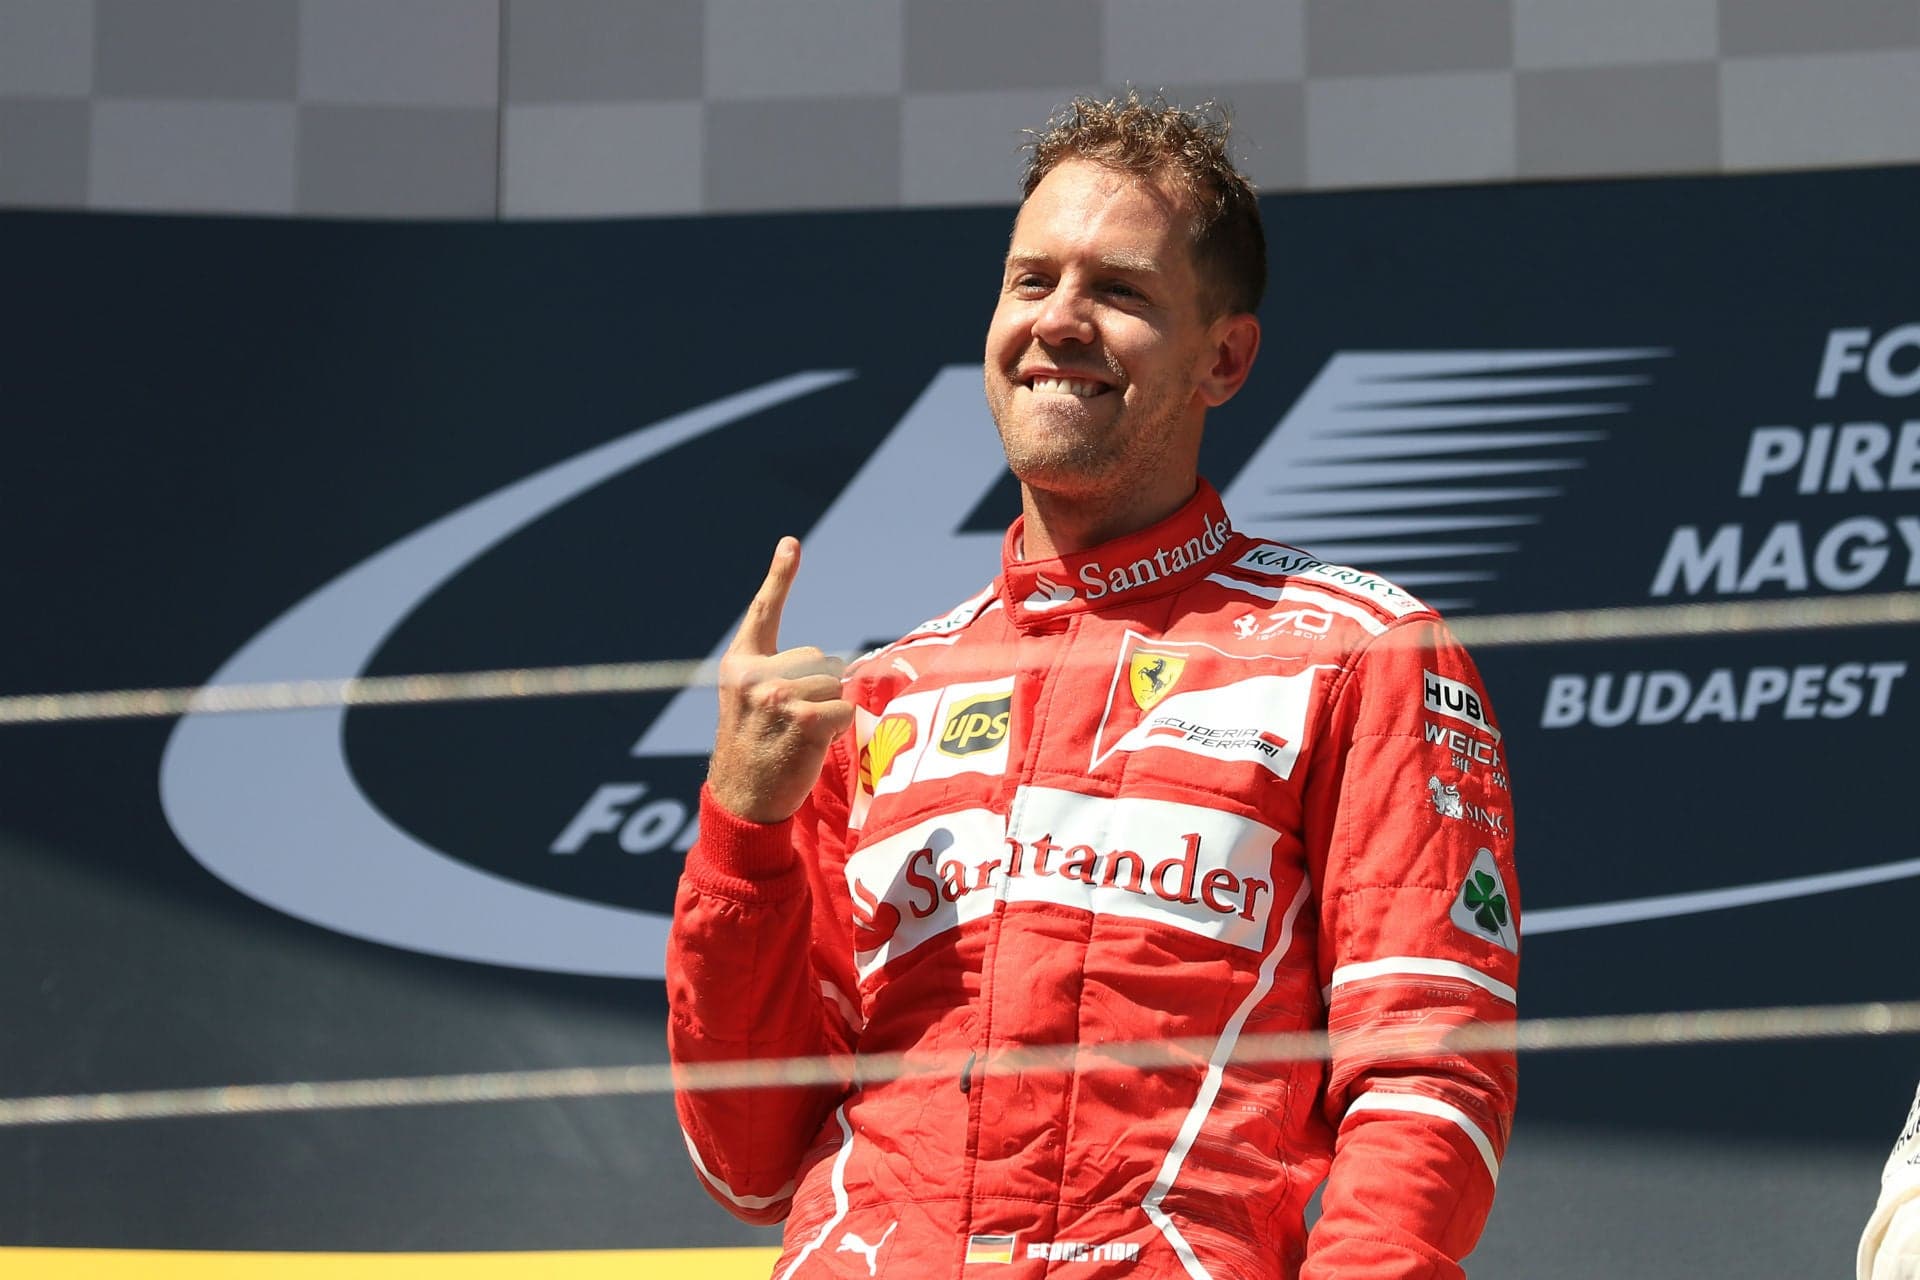 Ferrari Signs Sebastian Vettel to Contract Extension Through 2020